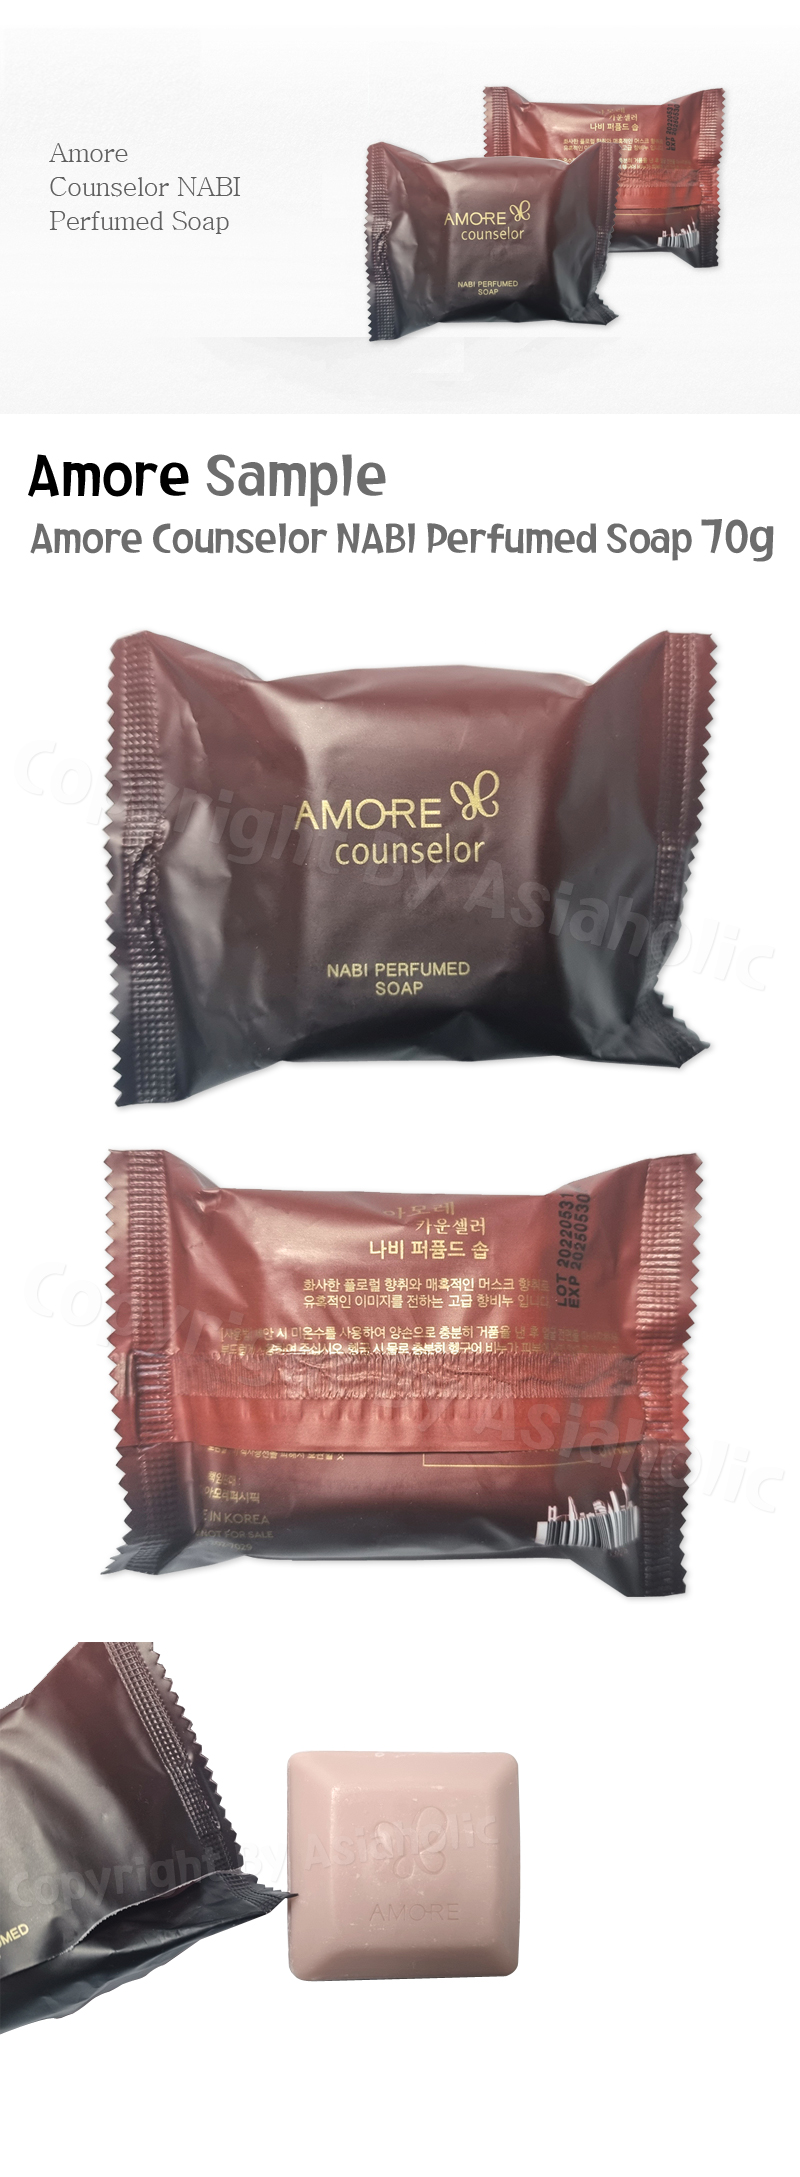 Amore Counselor NABI Perfumed Soap 70g x 3pcs (210g) Sample Hera Zeal Newest